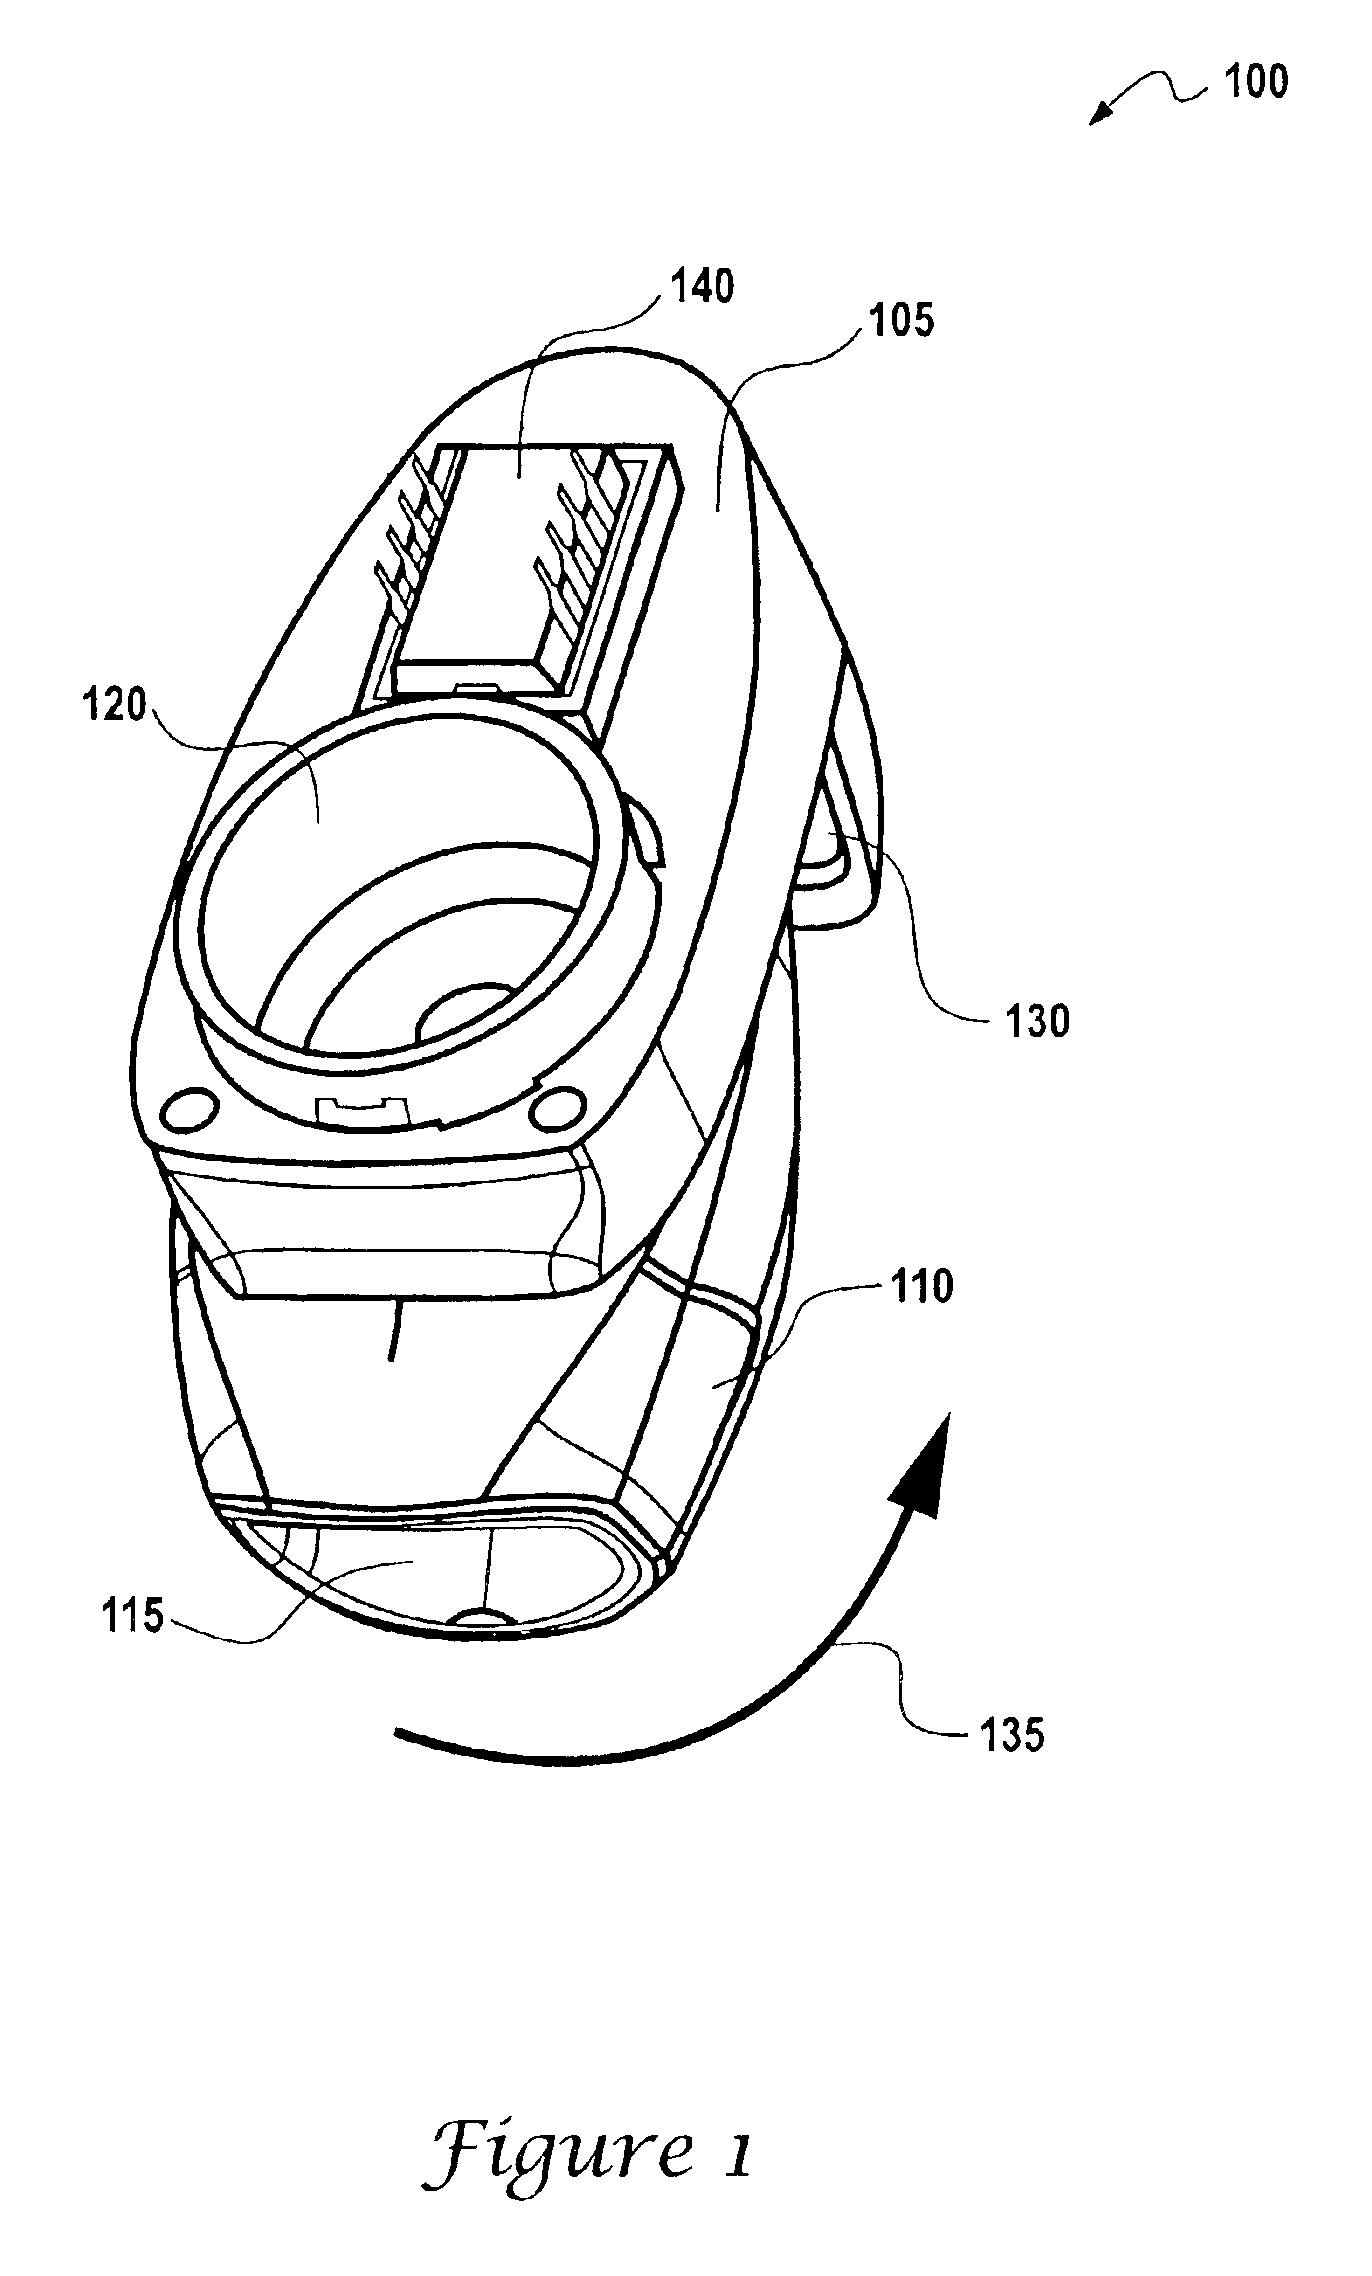 Indirect flow measurement through a breath-operated inhaler